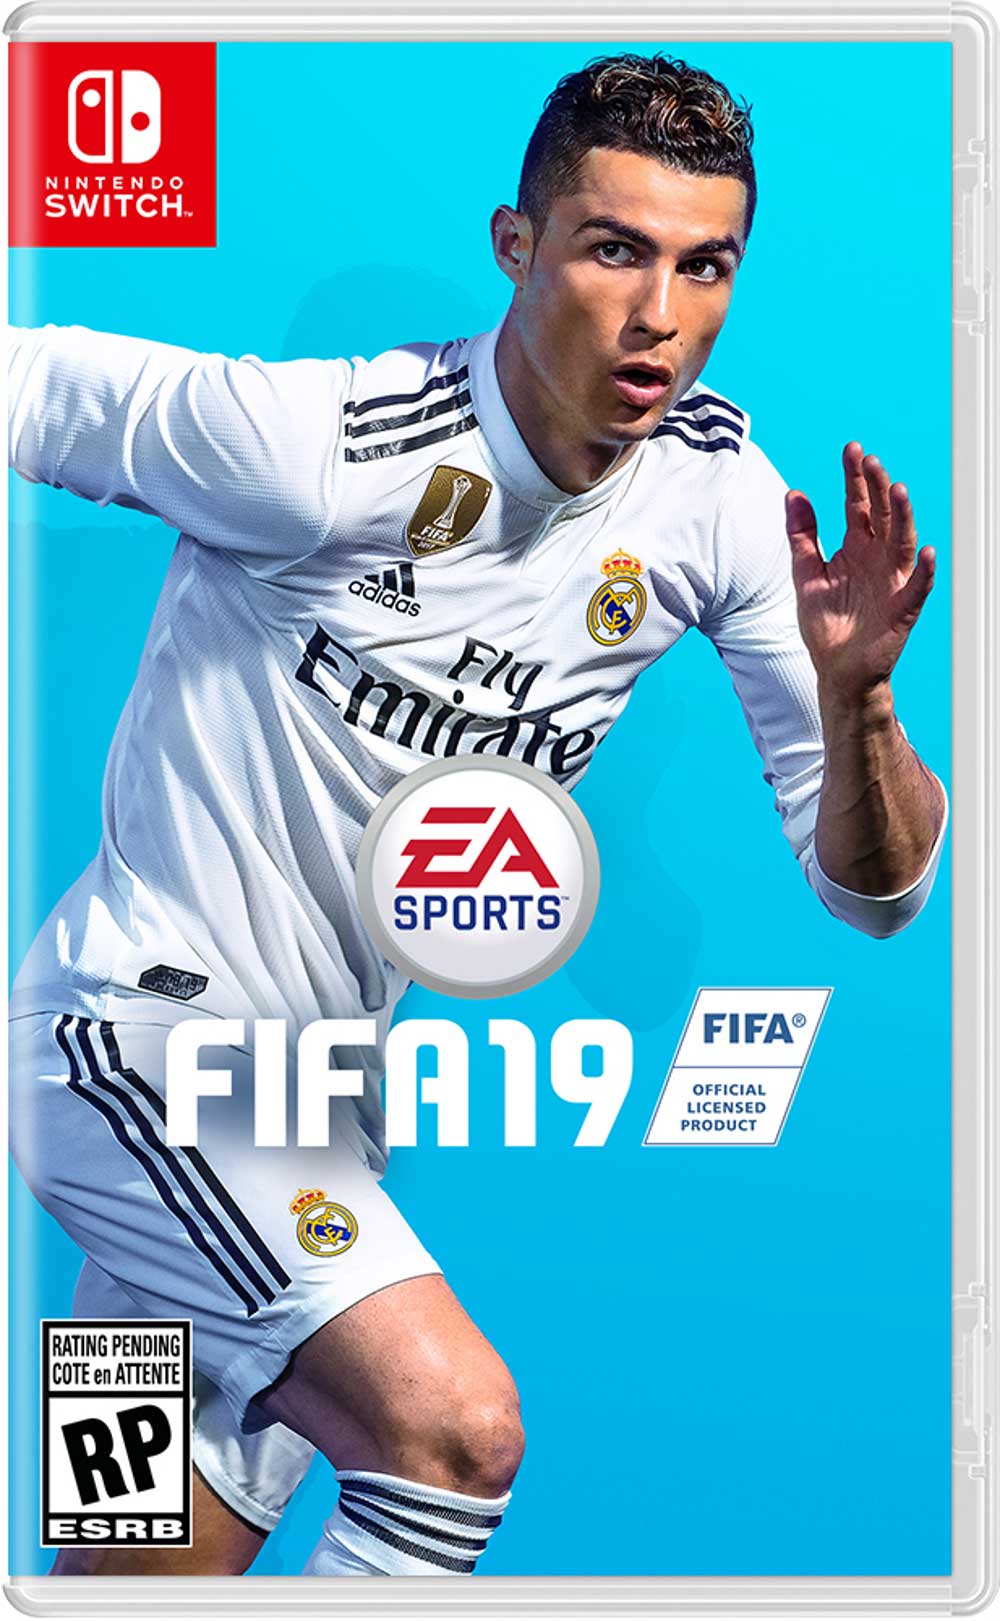 Todas las Portadas de FIFA 19